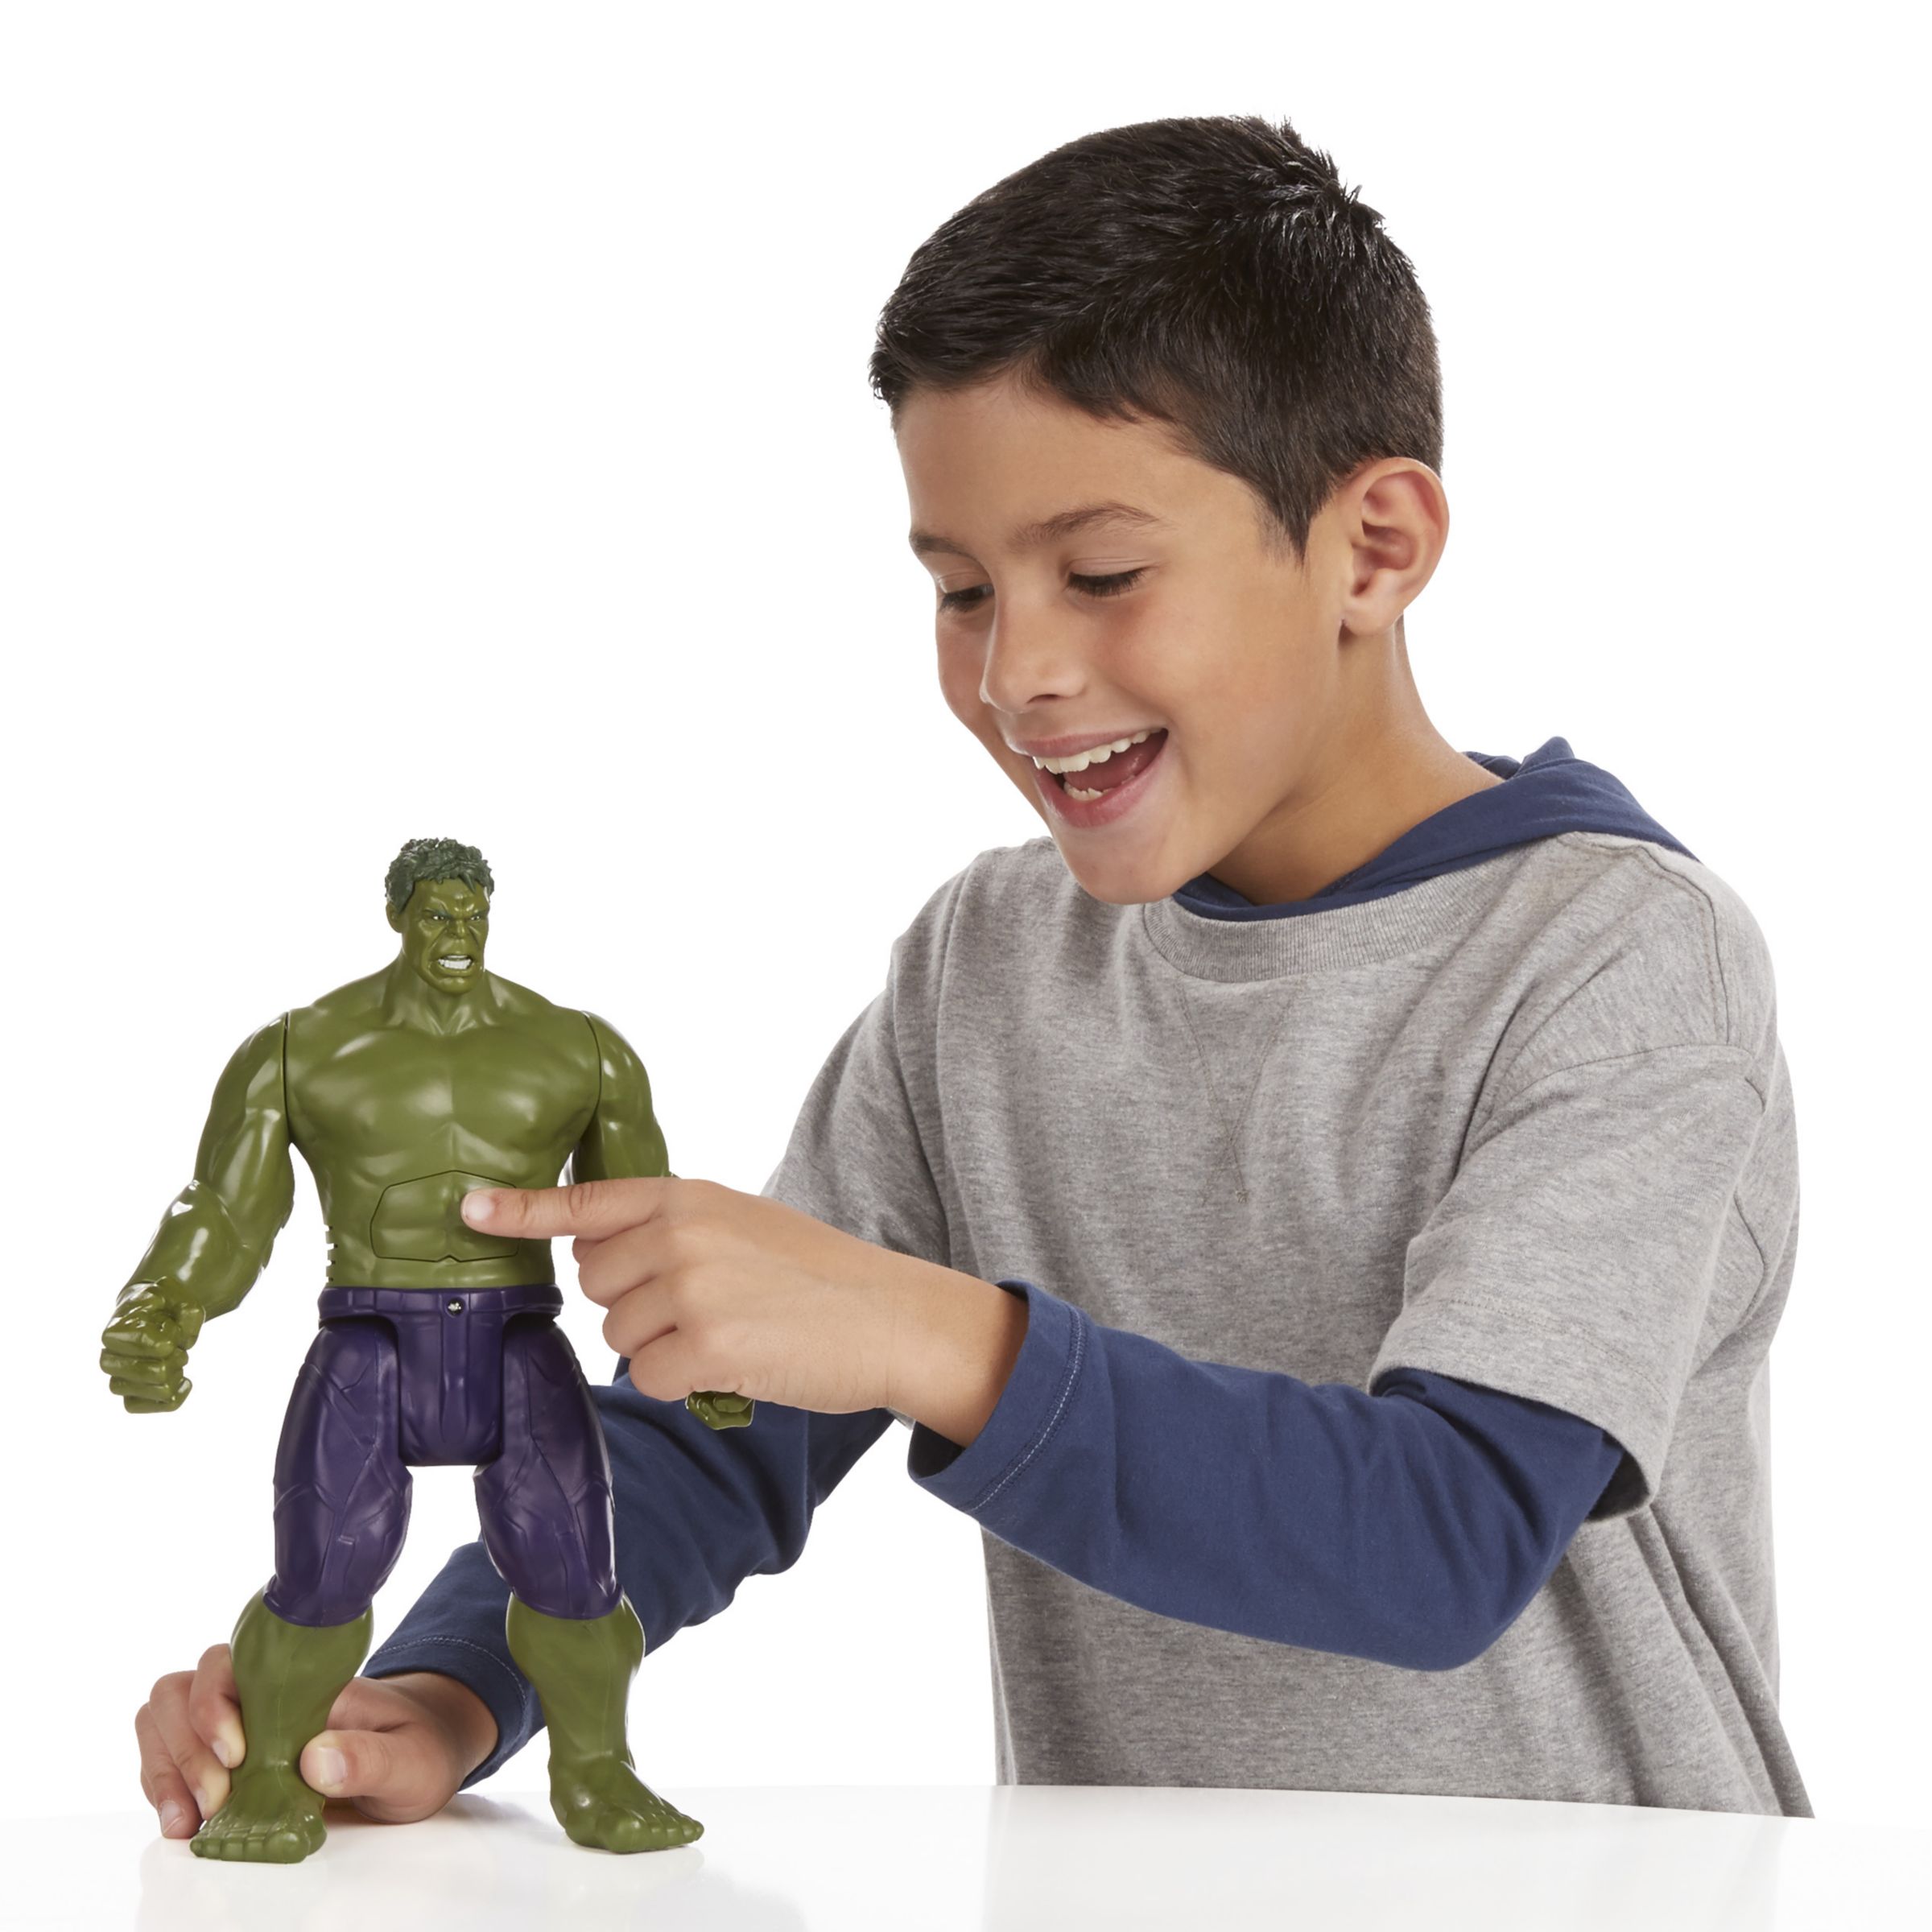 marvel avengers titan hero tech hulk figure